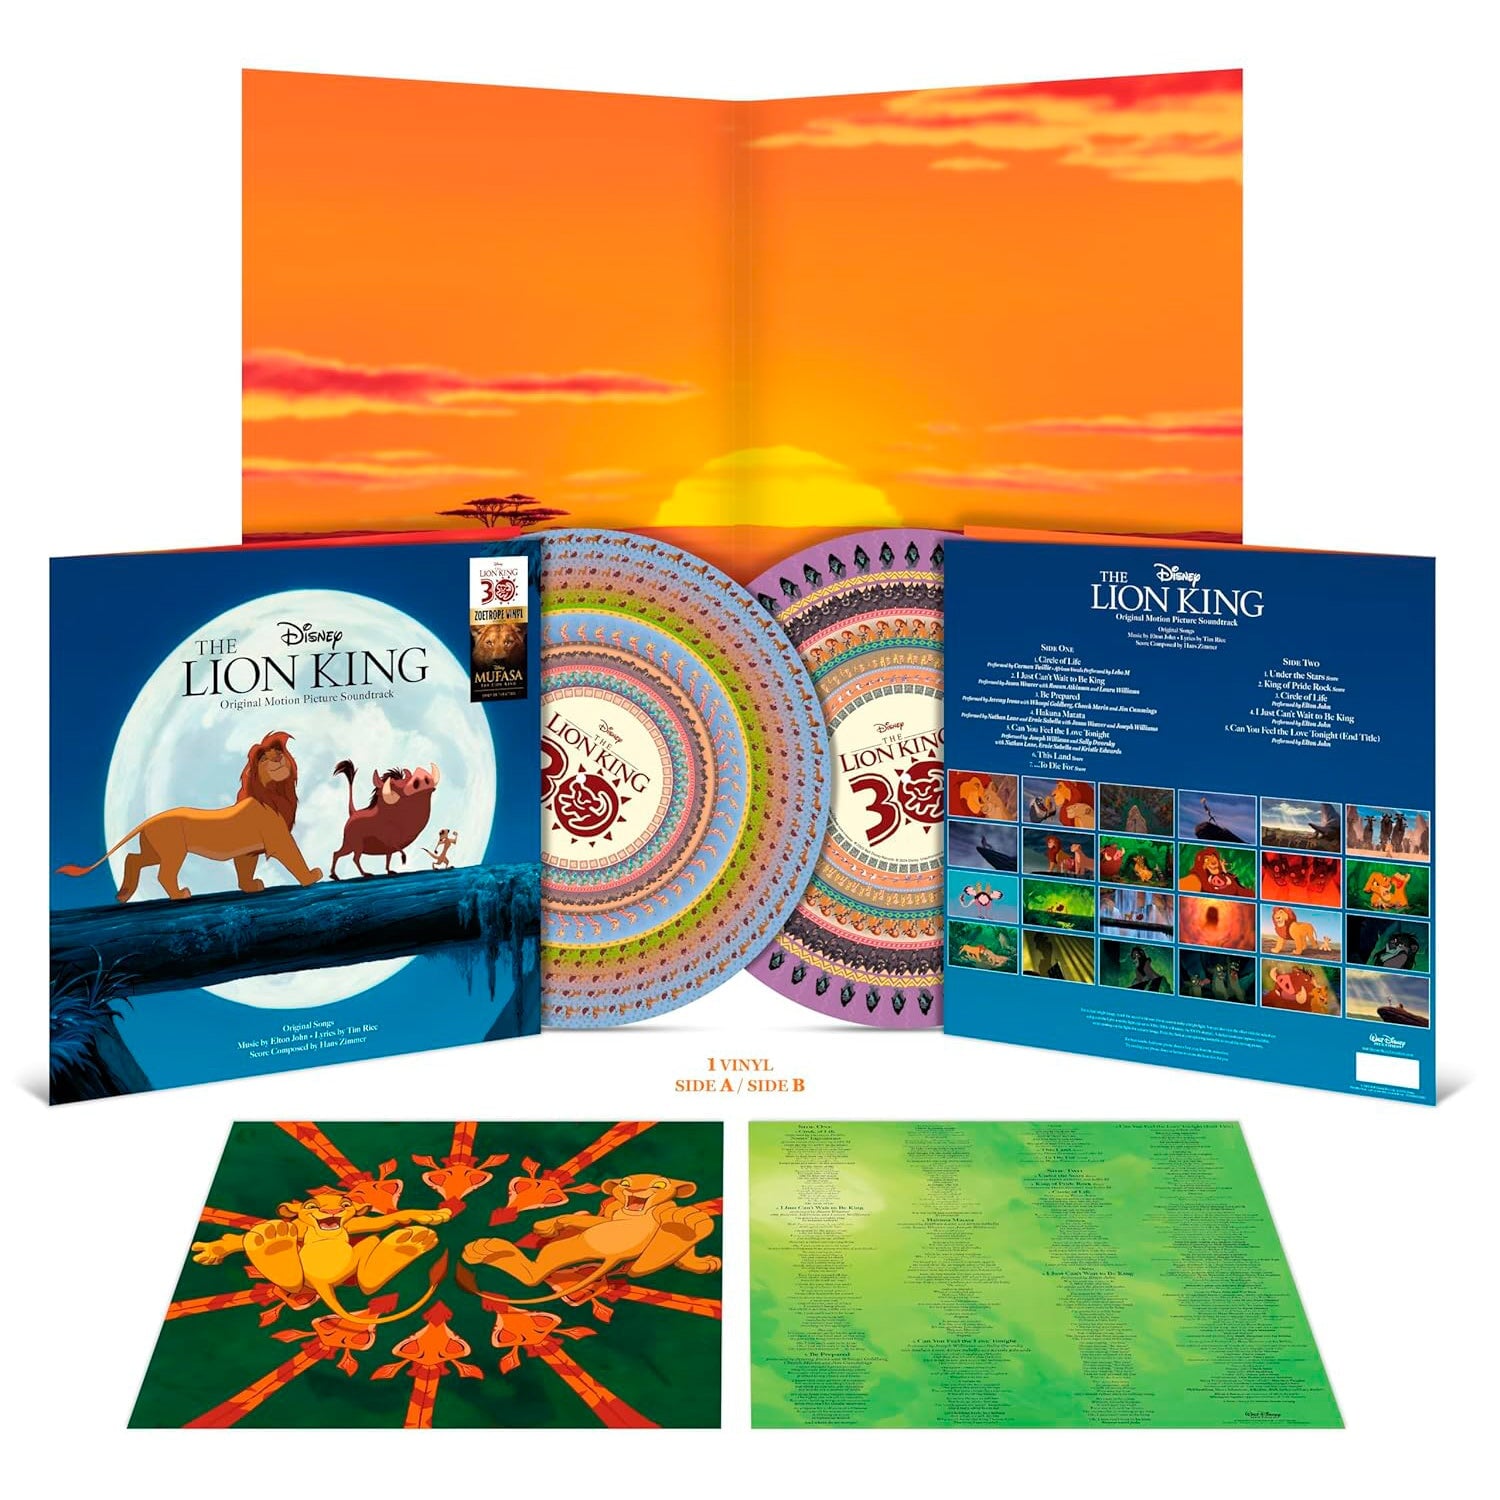 The Lion King (Original Motion Picture Soundtrack) (30th Anniversary Zoetrope Vinyl LP)